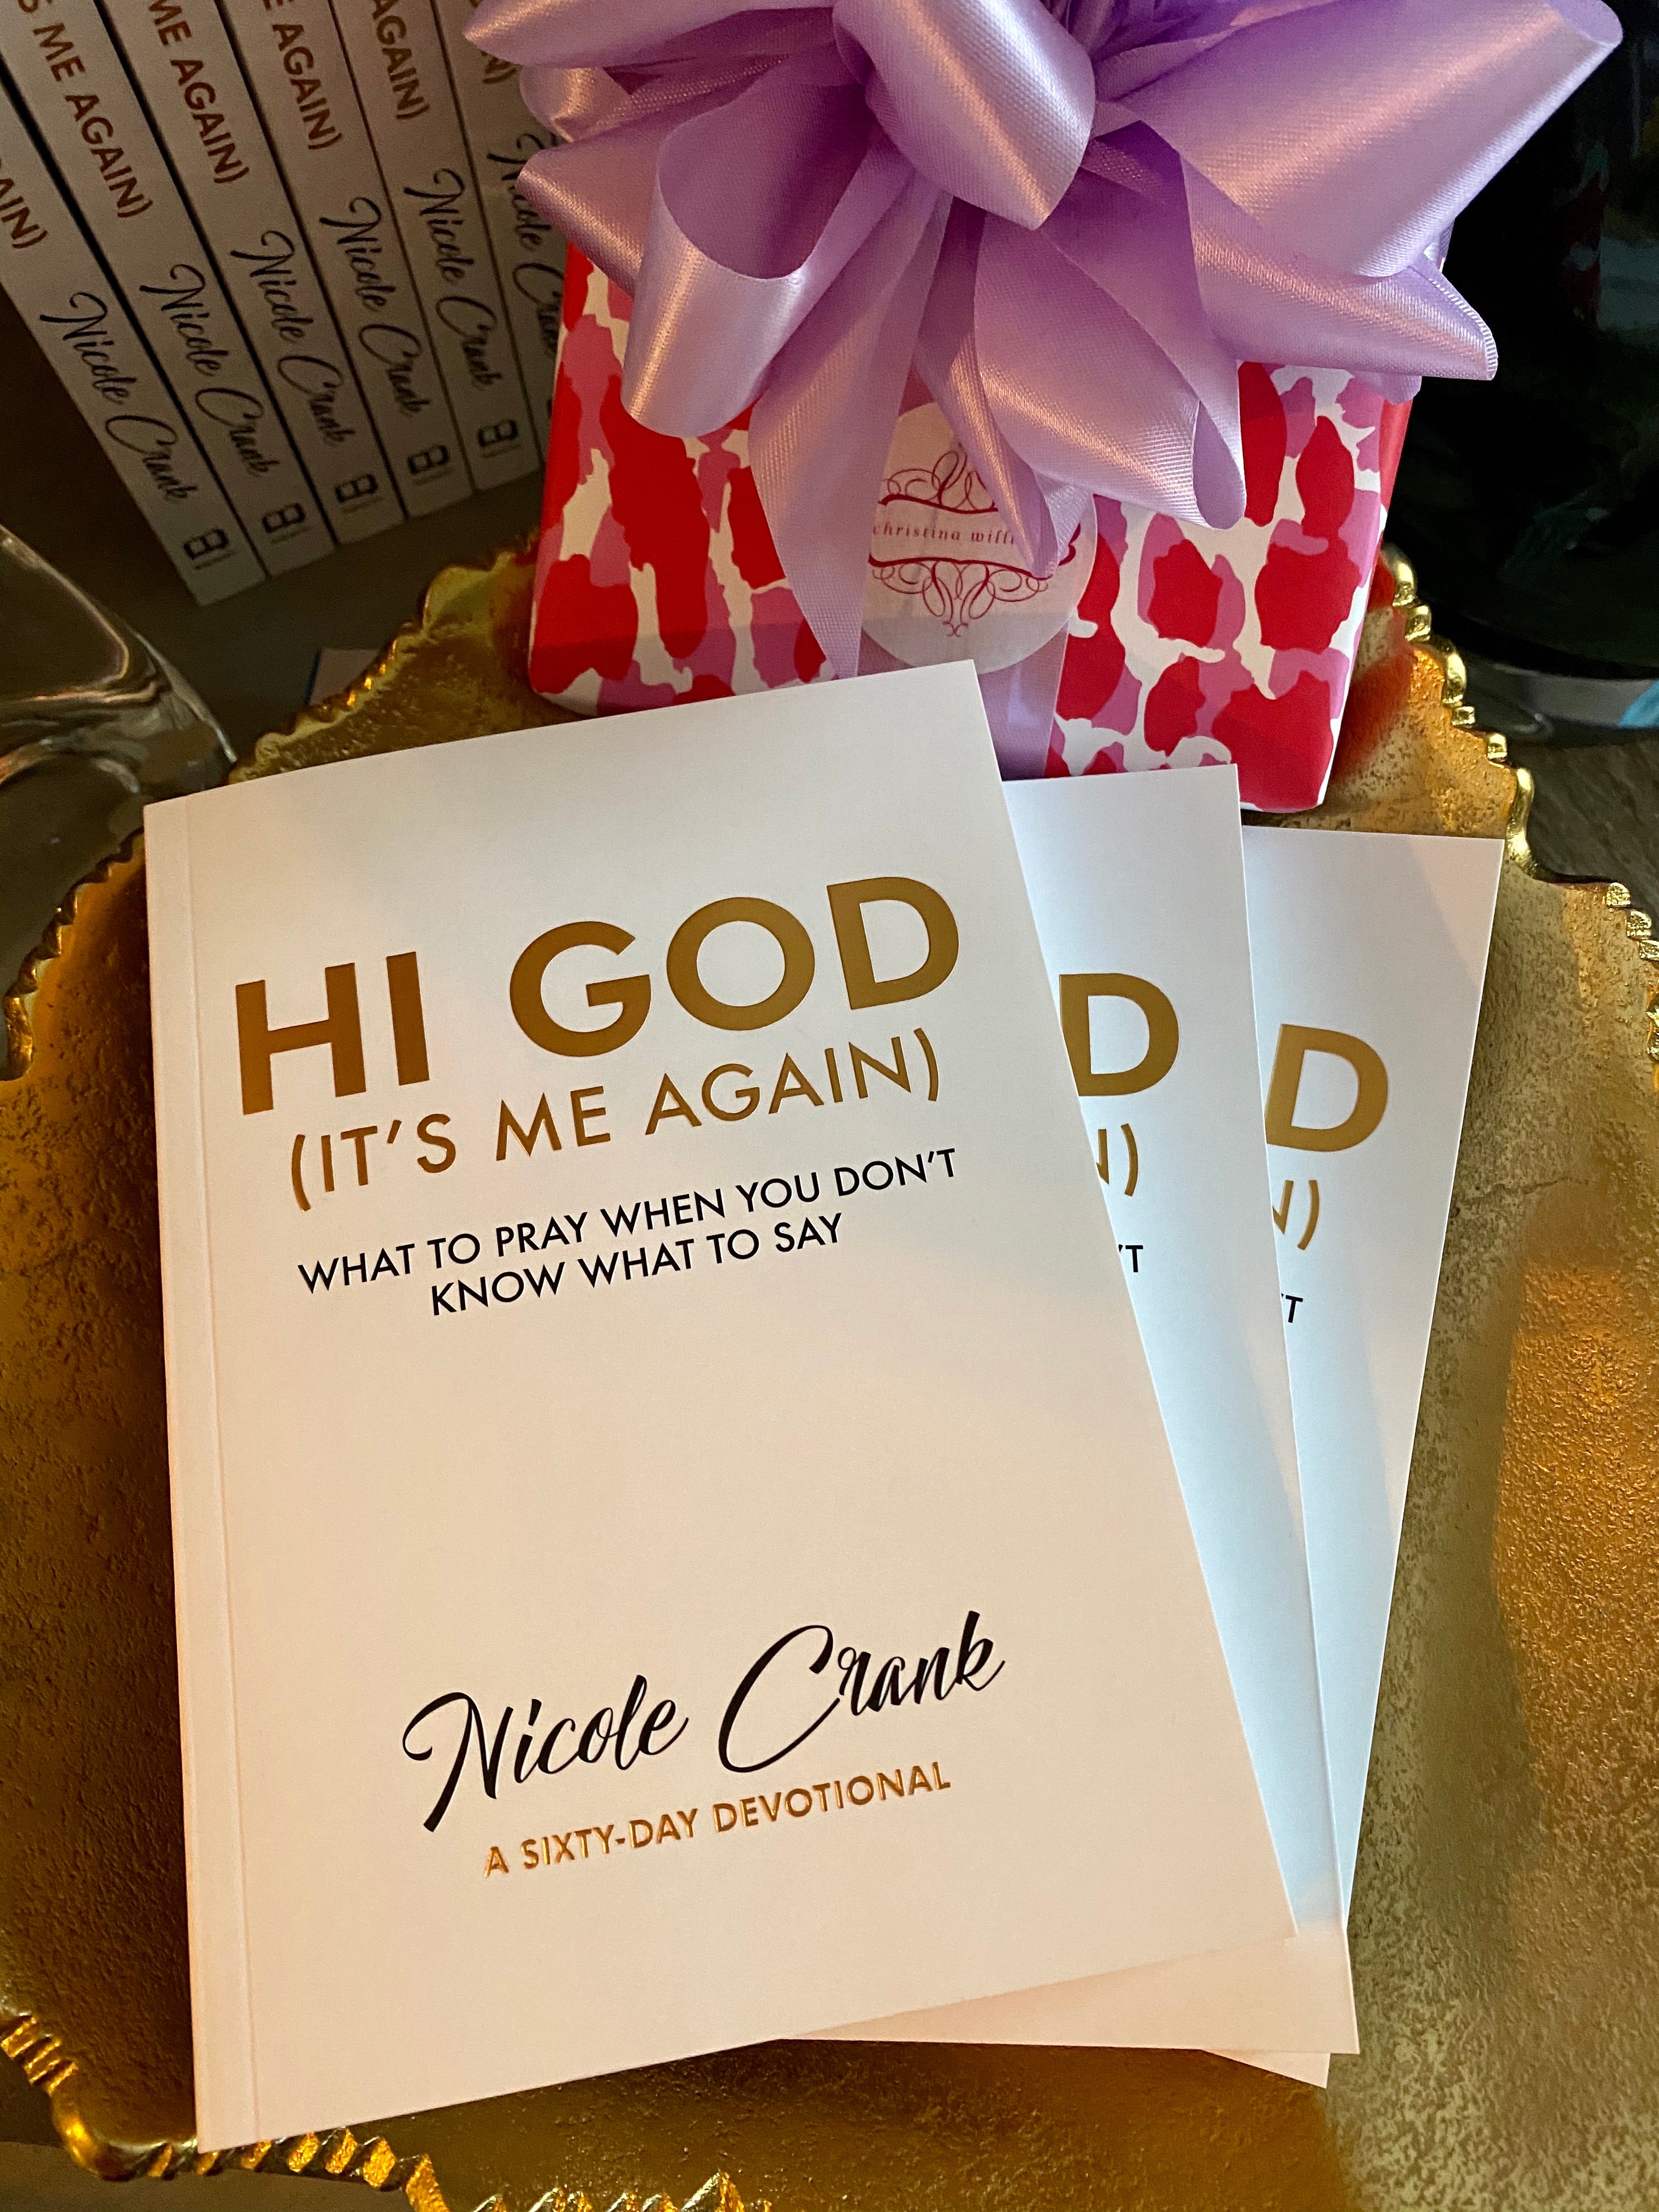 Hi God by Nicole Crank